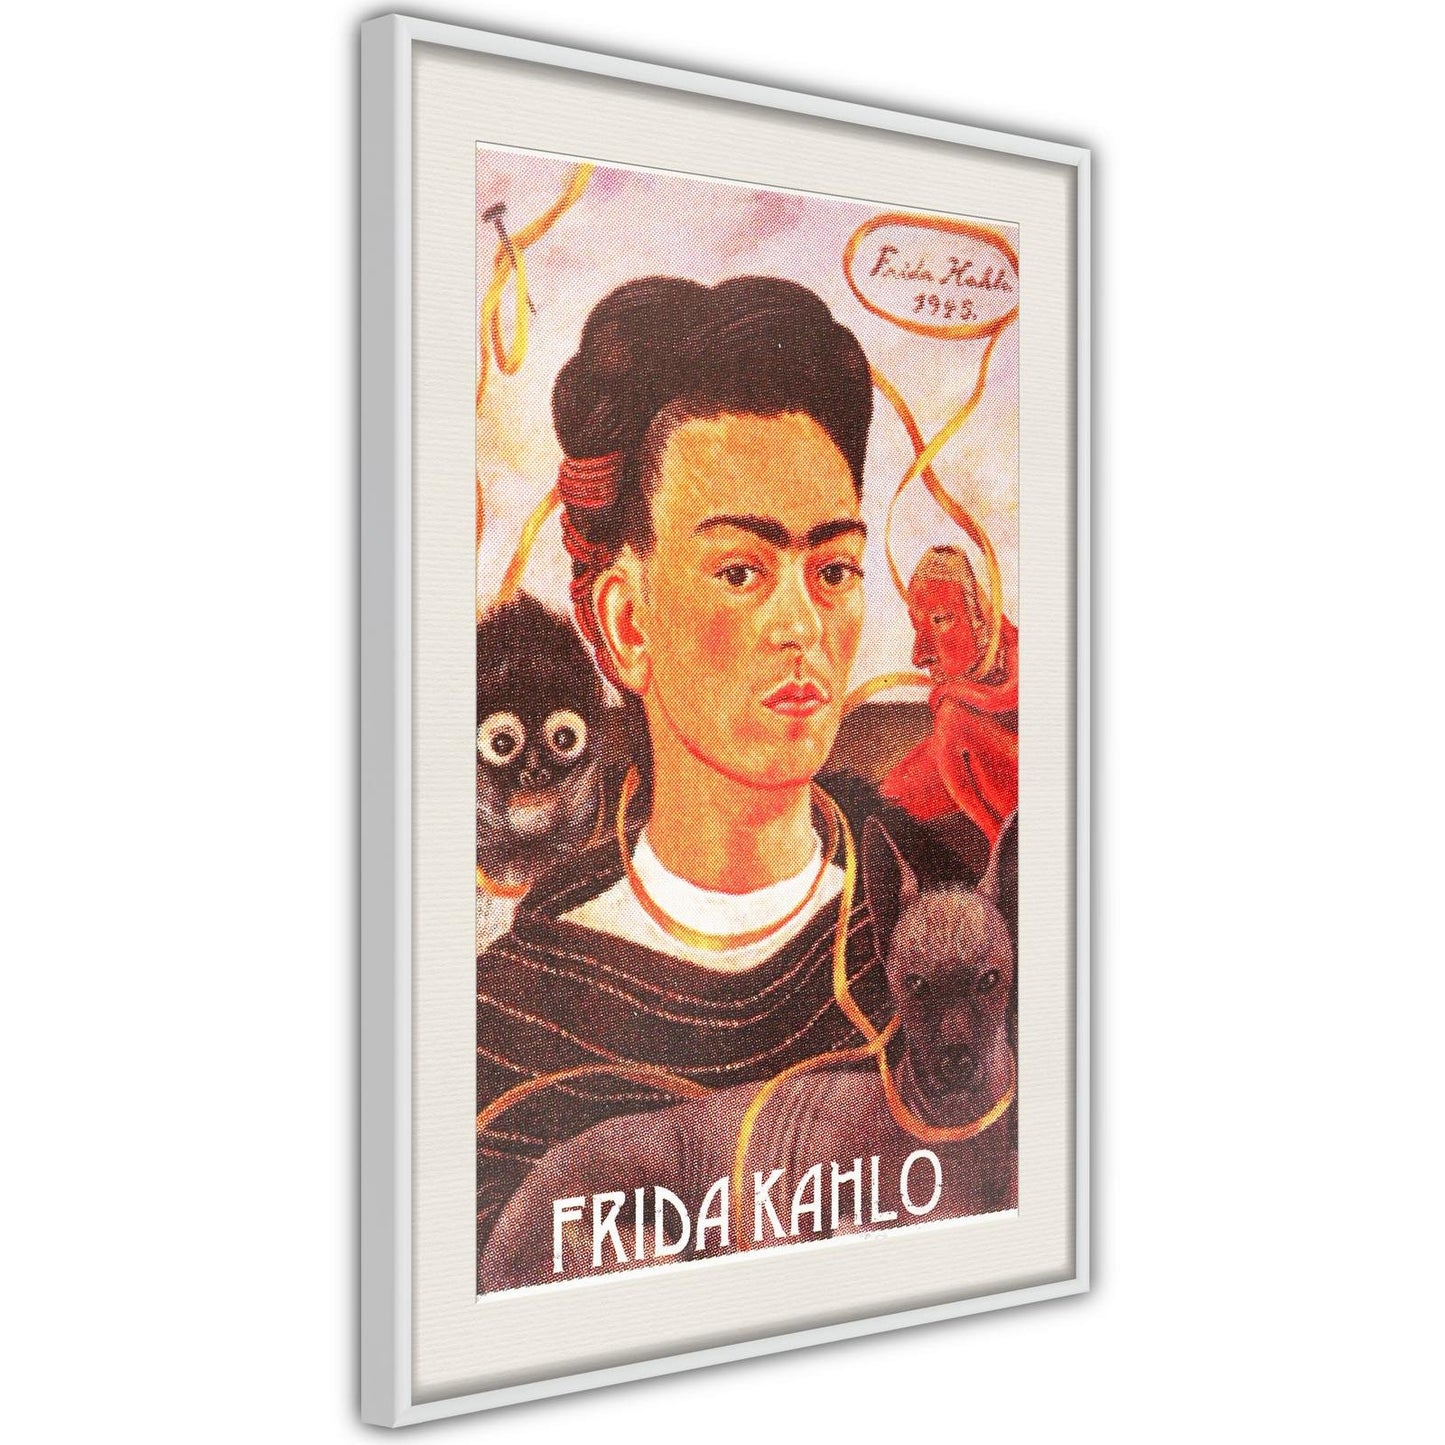 Frida Khalo – Self-Portrait